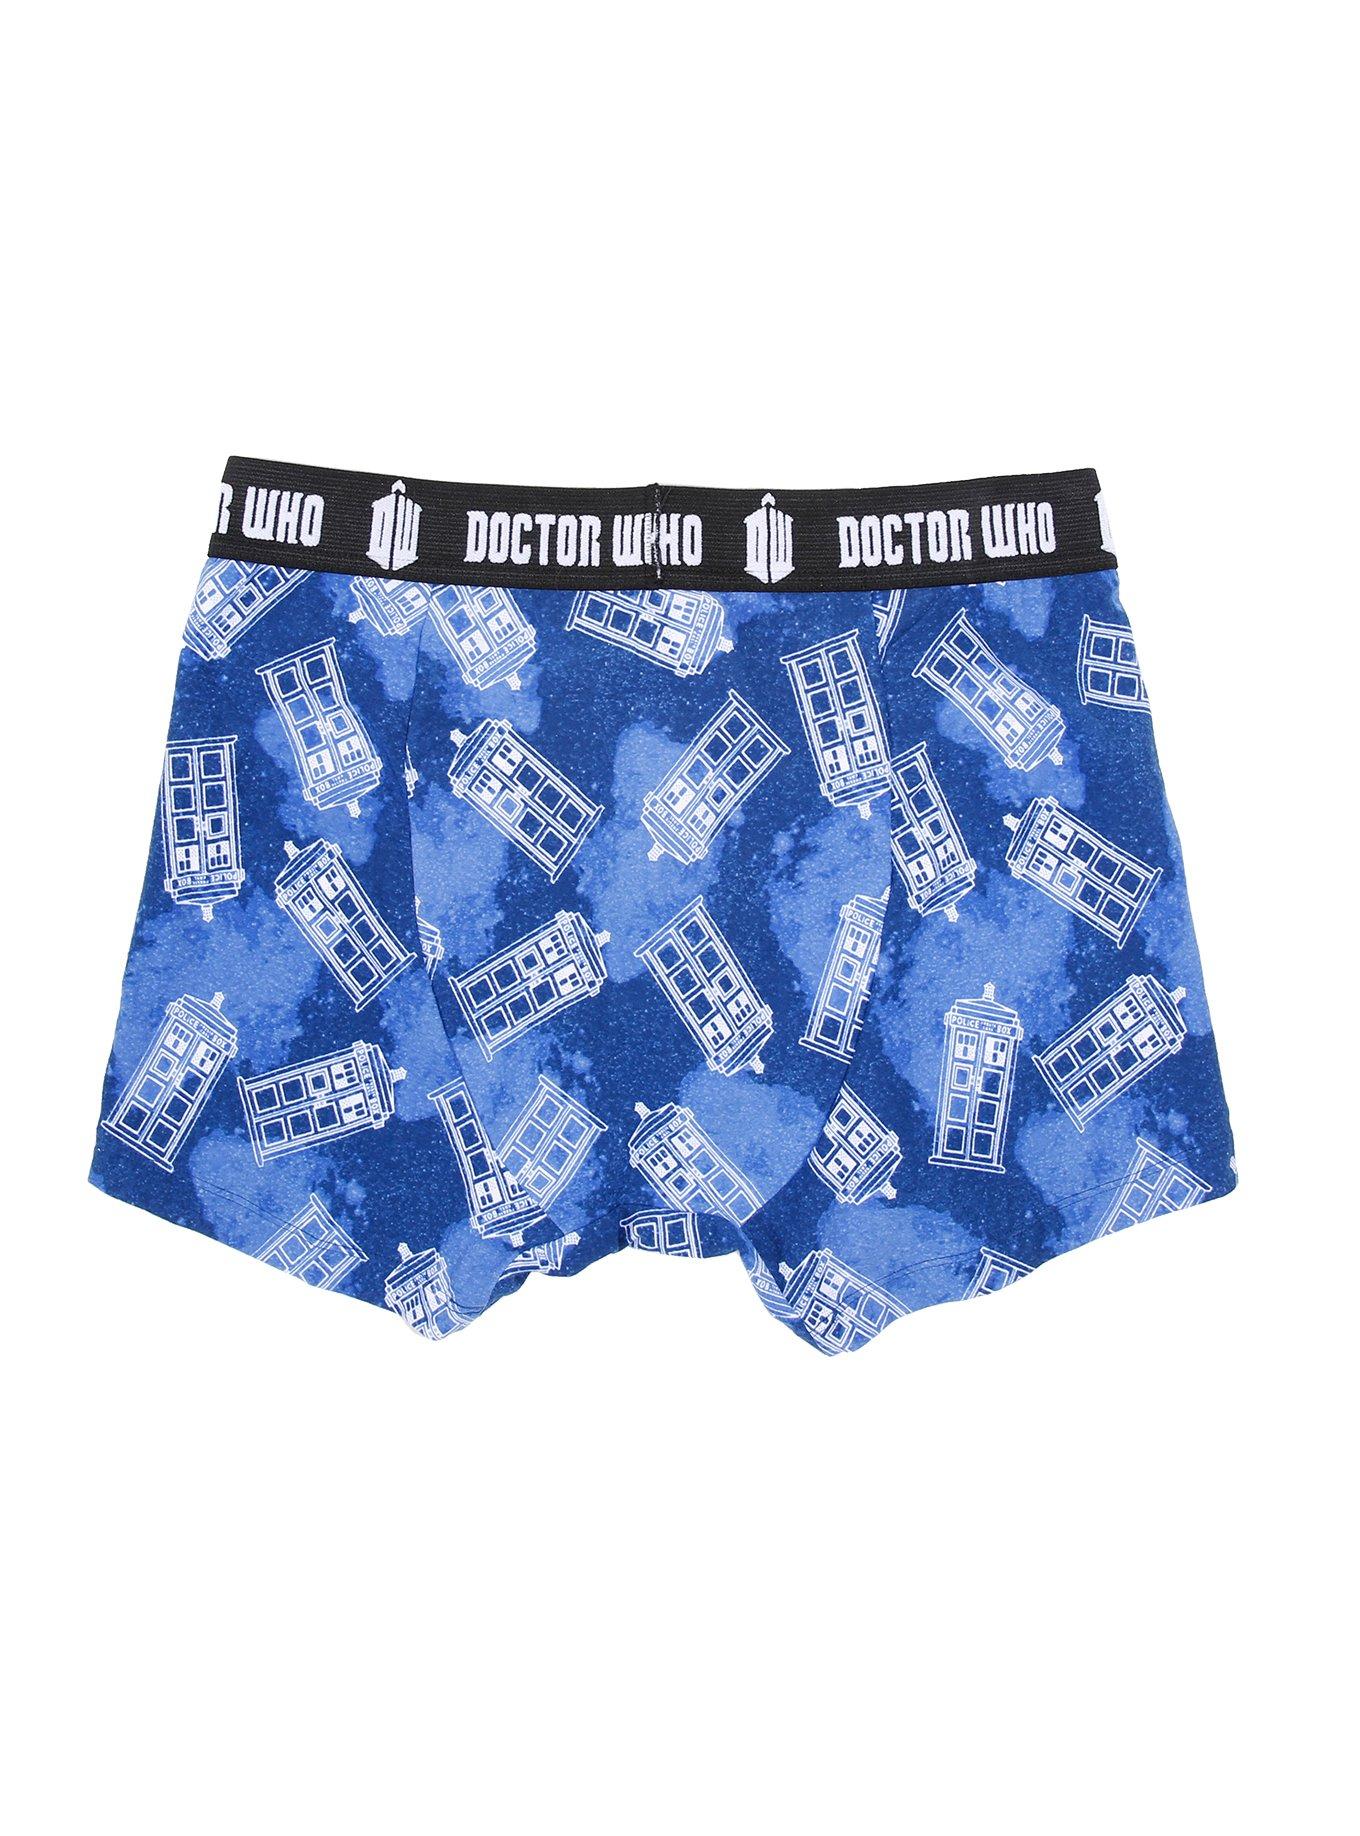 Dr. Who TARDIS Galaxy Boxer Briefs, , alternate